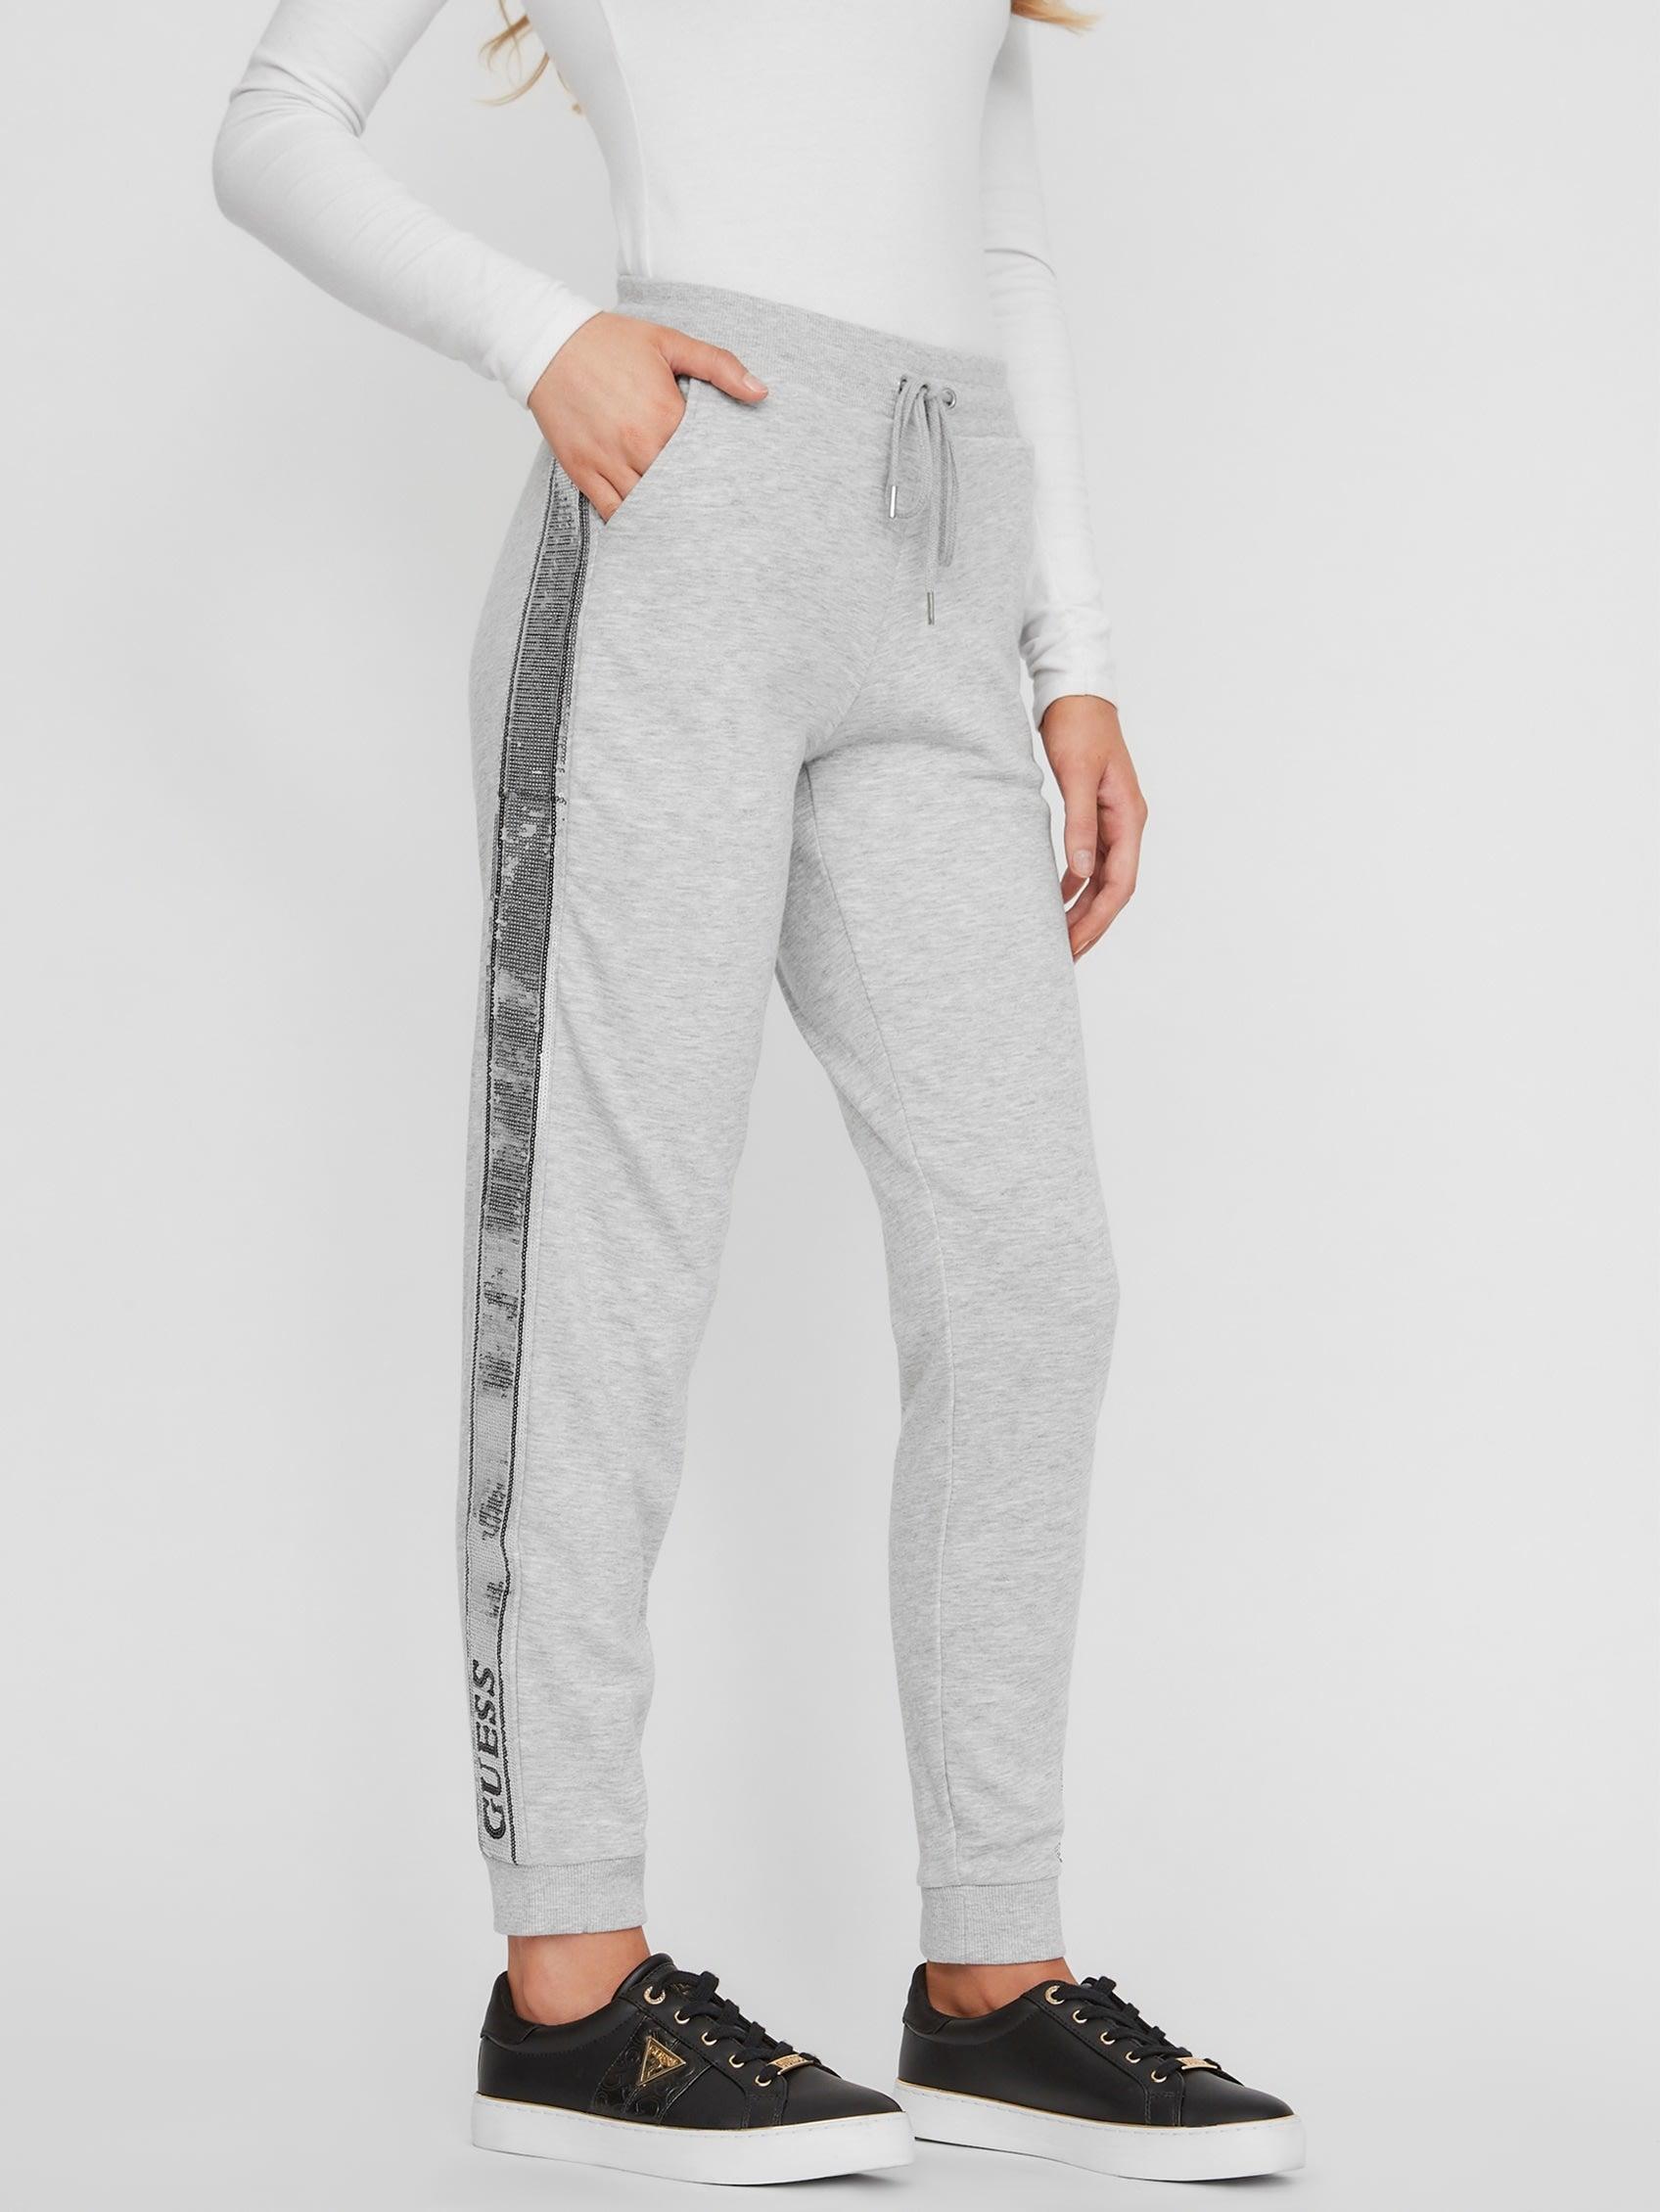 Guess Women's Active Long Jogger Sweatpants, Light Melange Grey, X-Large :  : Clothing, Shoes & Accessories